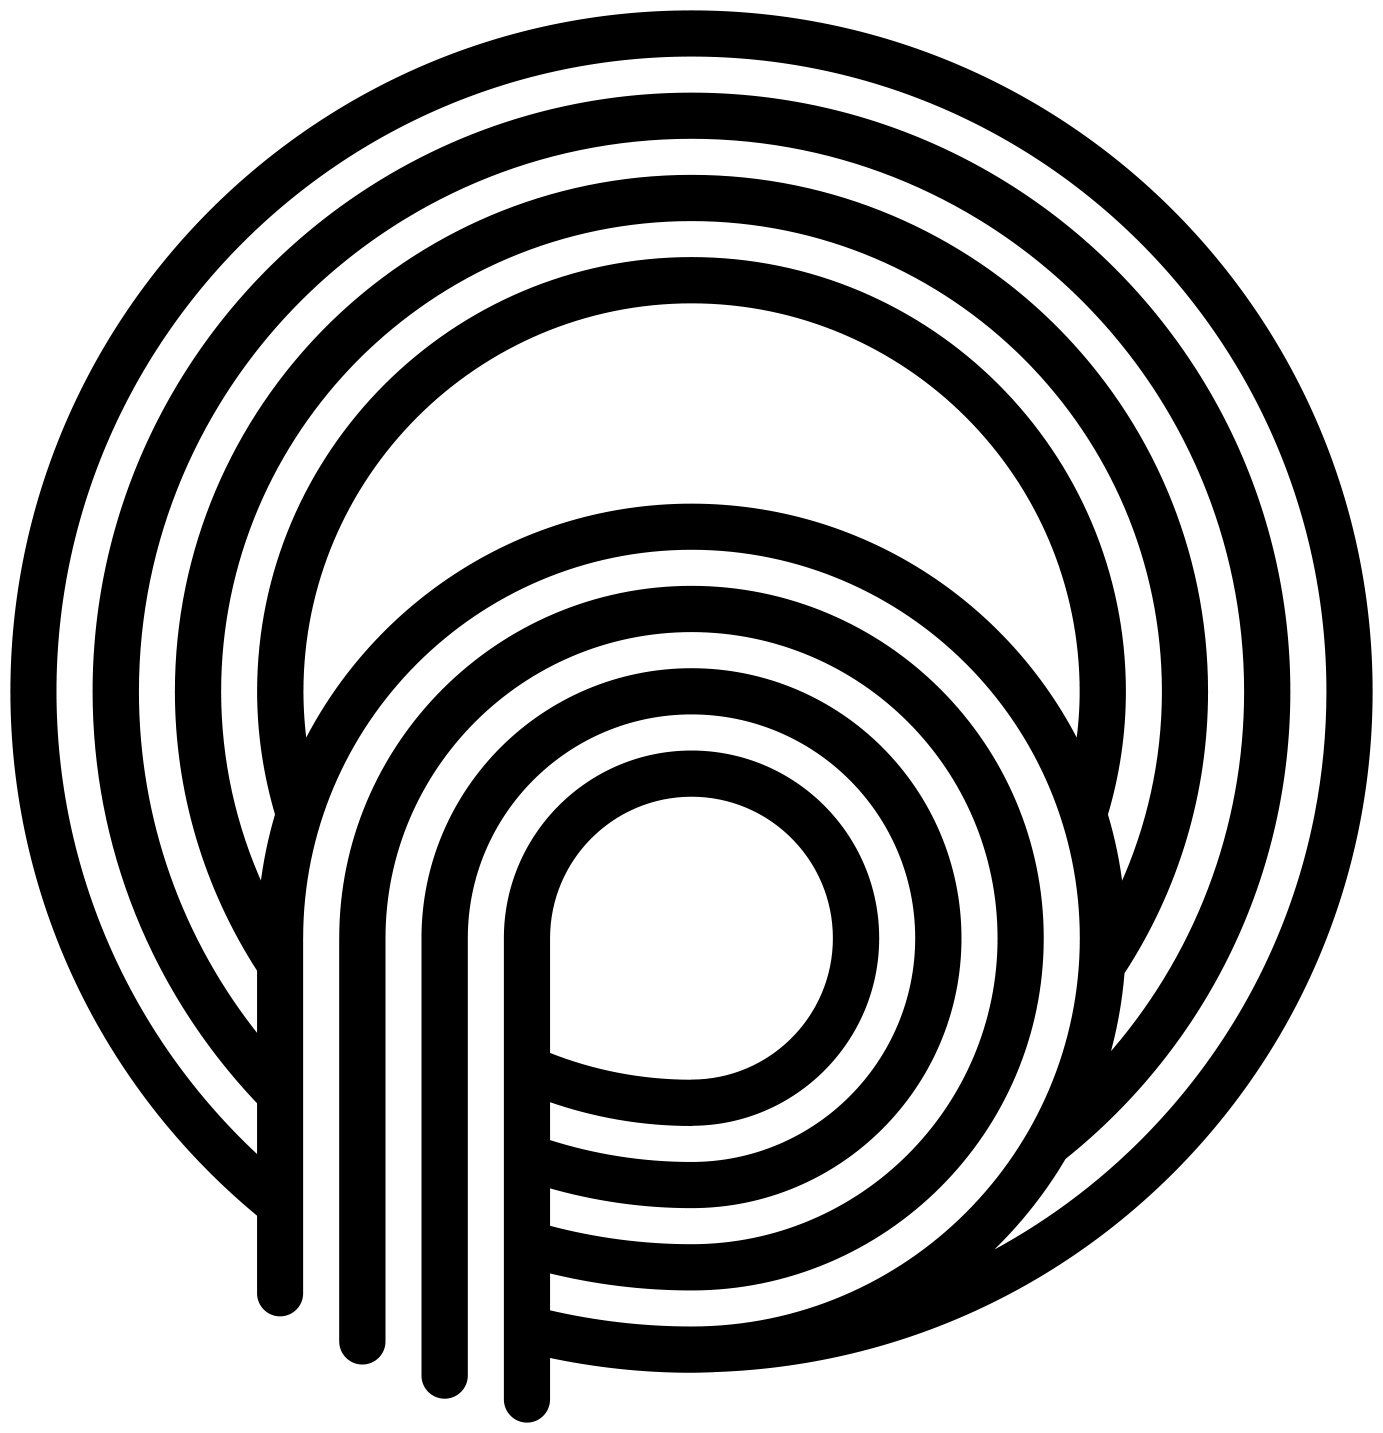 Trademark Logo OP